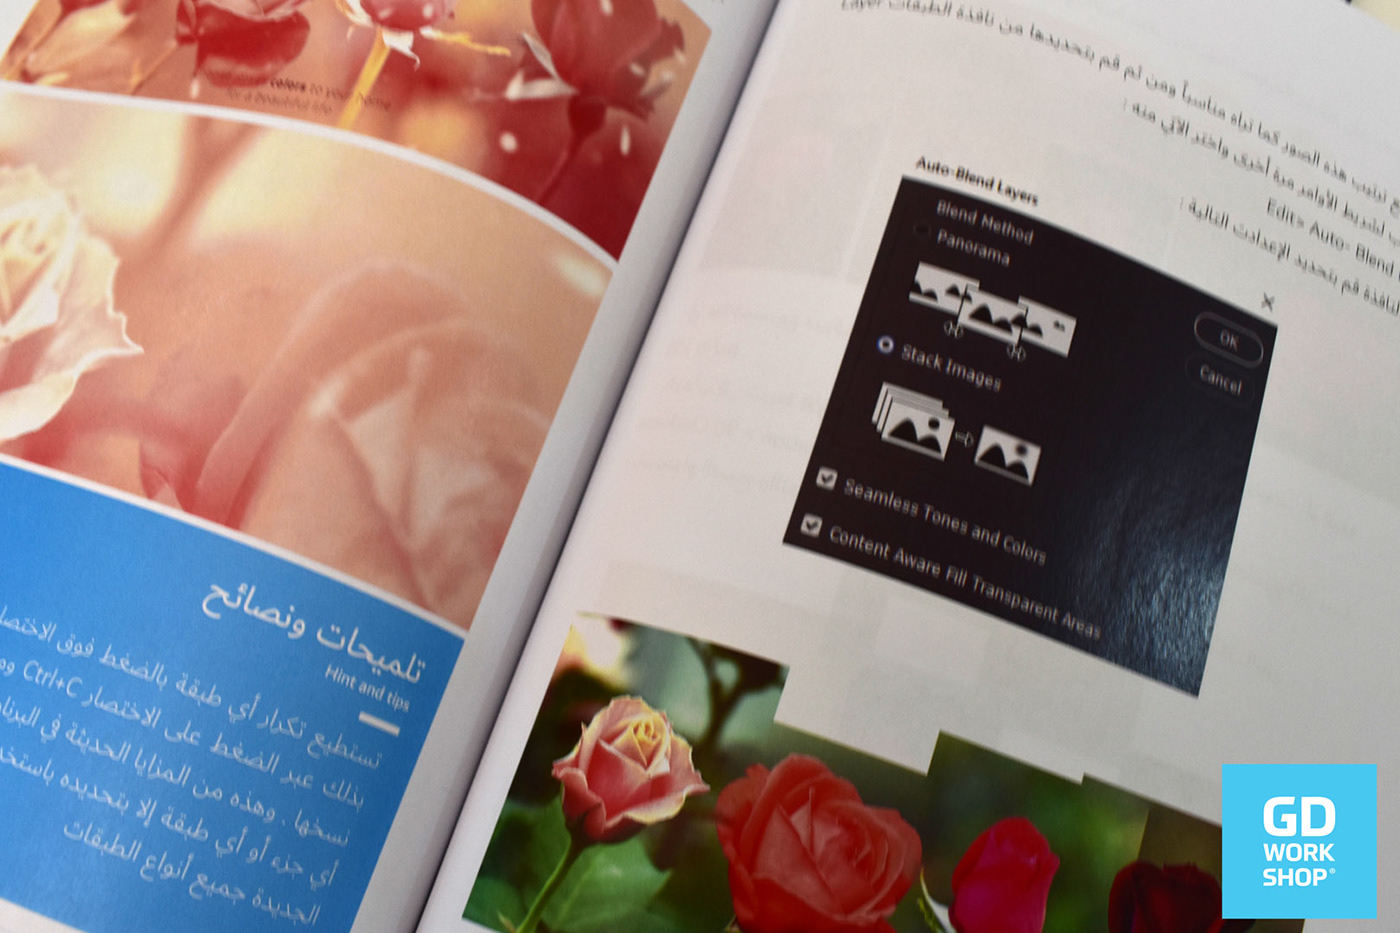 كتاب #فوتوشوب_بلغة_عربية Photoshop Book book bookcover photoshop cover classroom photoshop arabic